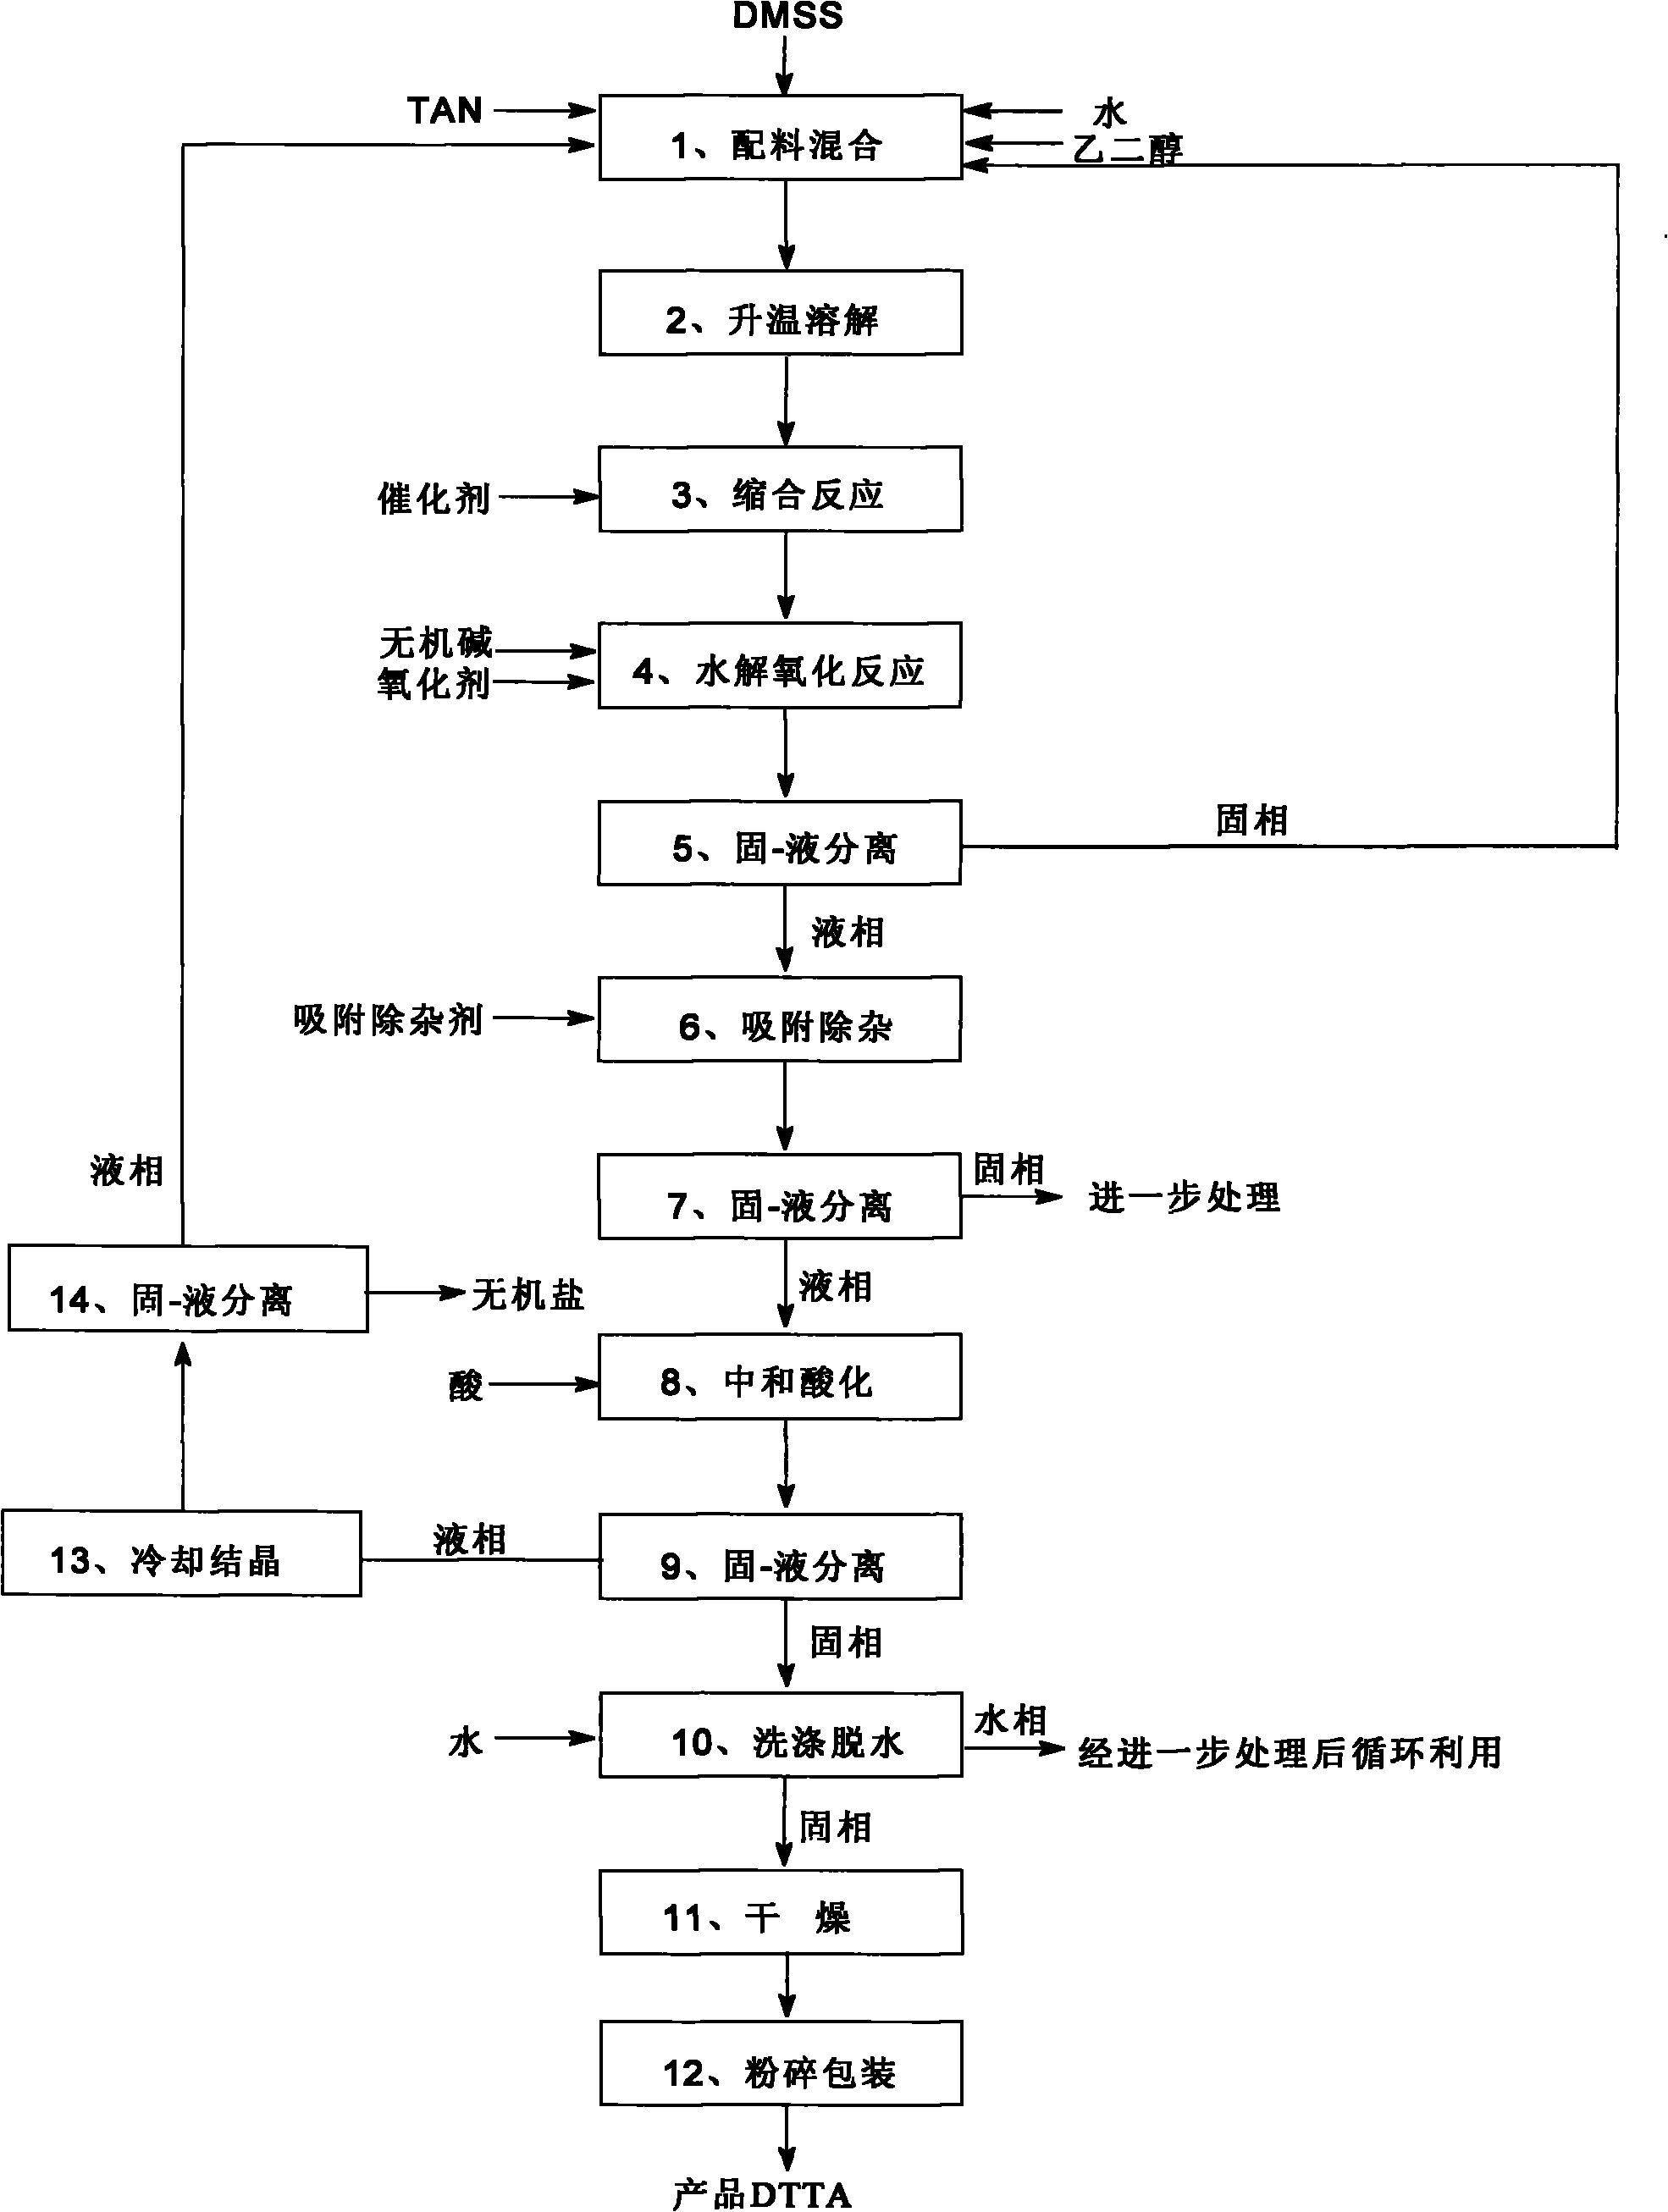 Method for preparing 2,5-diparamethylaniline terephthalic acid (DTTA)